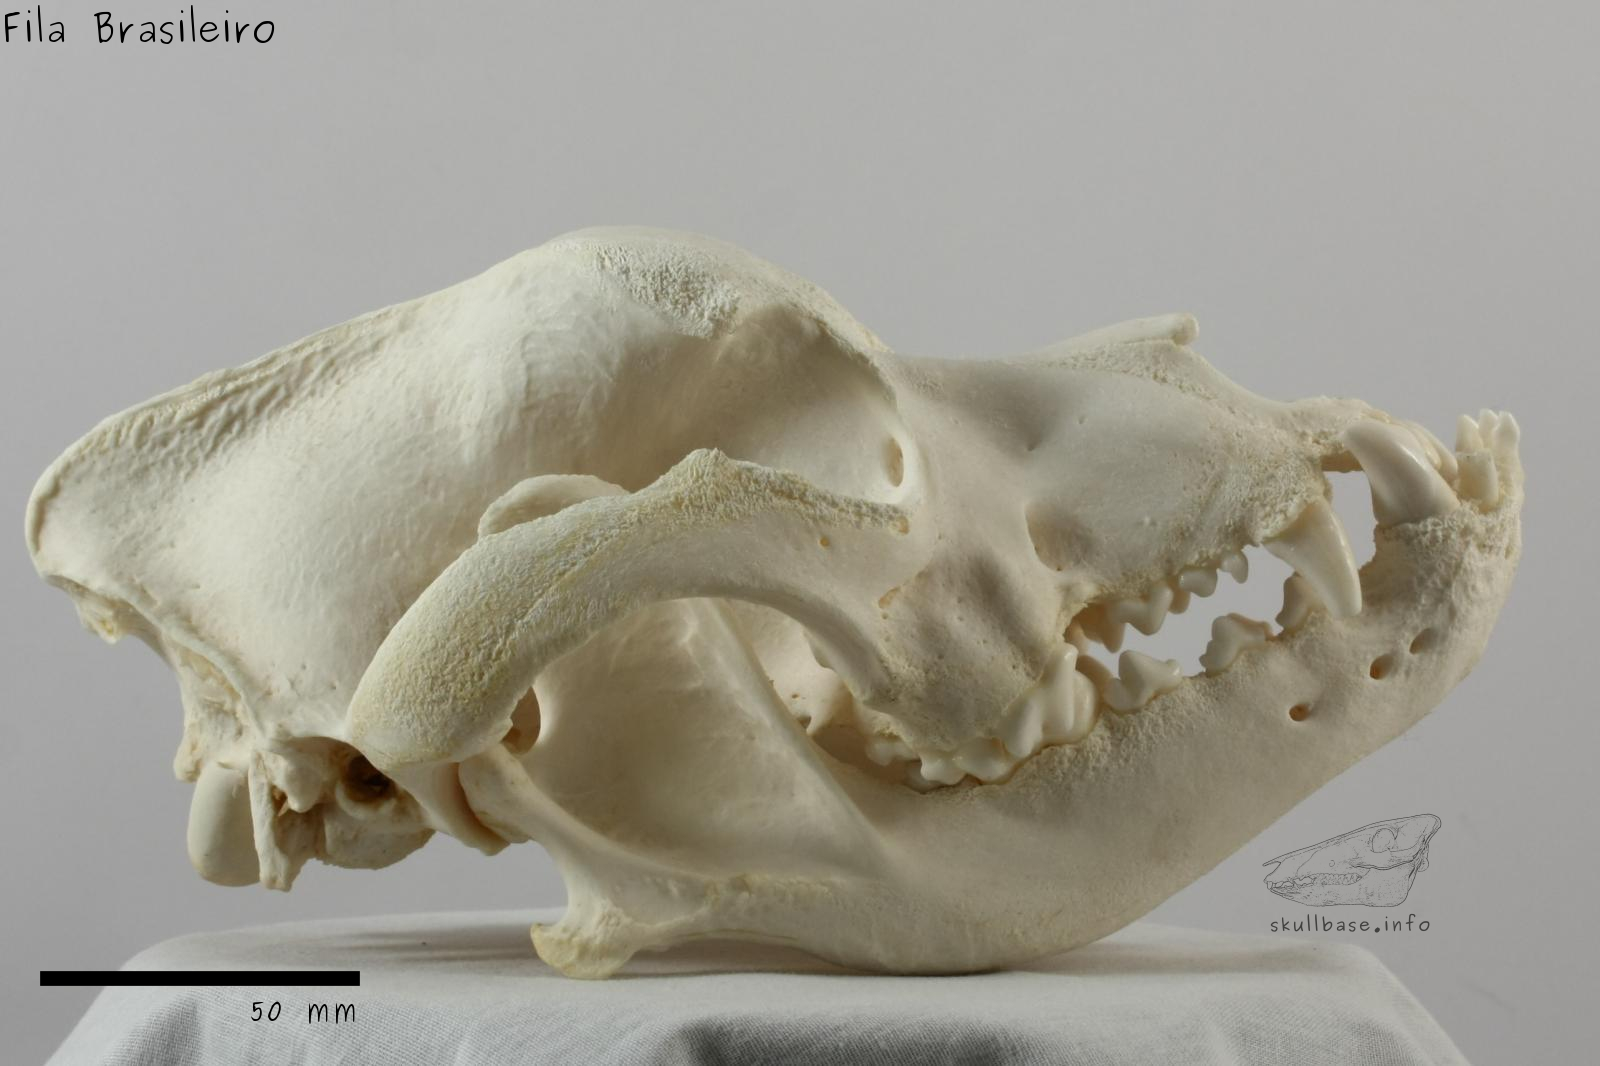 Fila Brasileiro (Canis lupus familiaris) skull lateral view